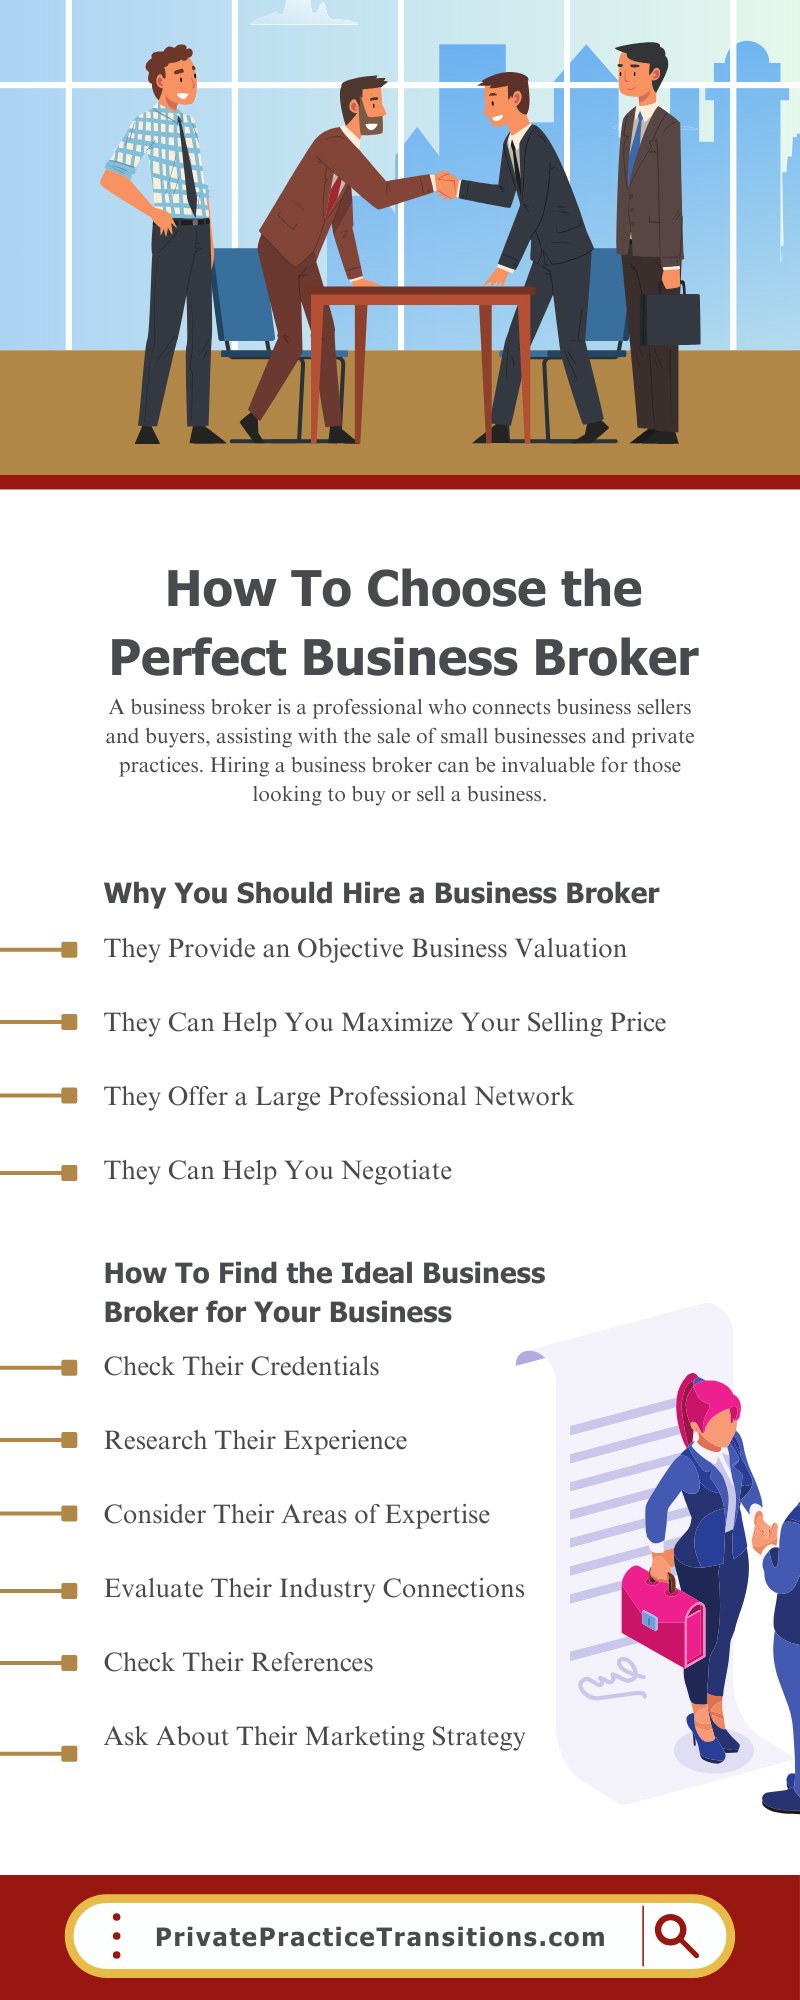 Choosing the perfect business broker